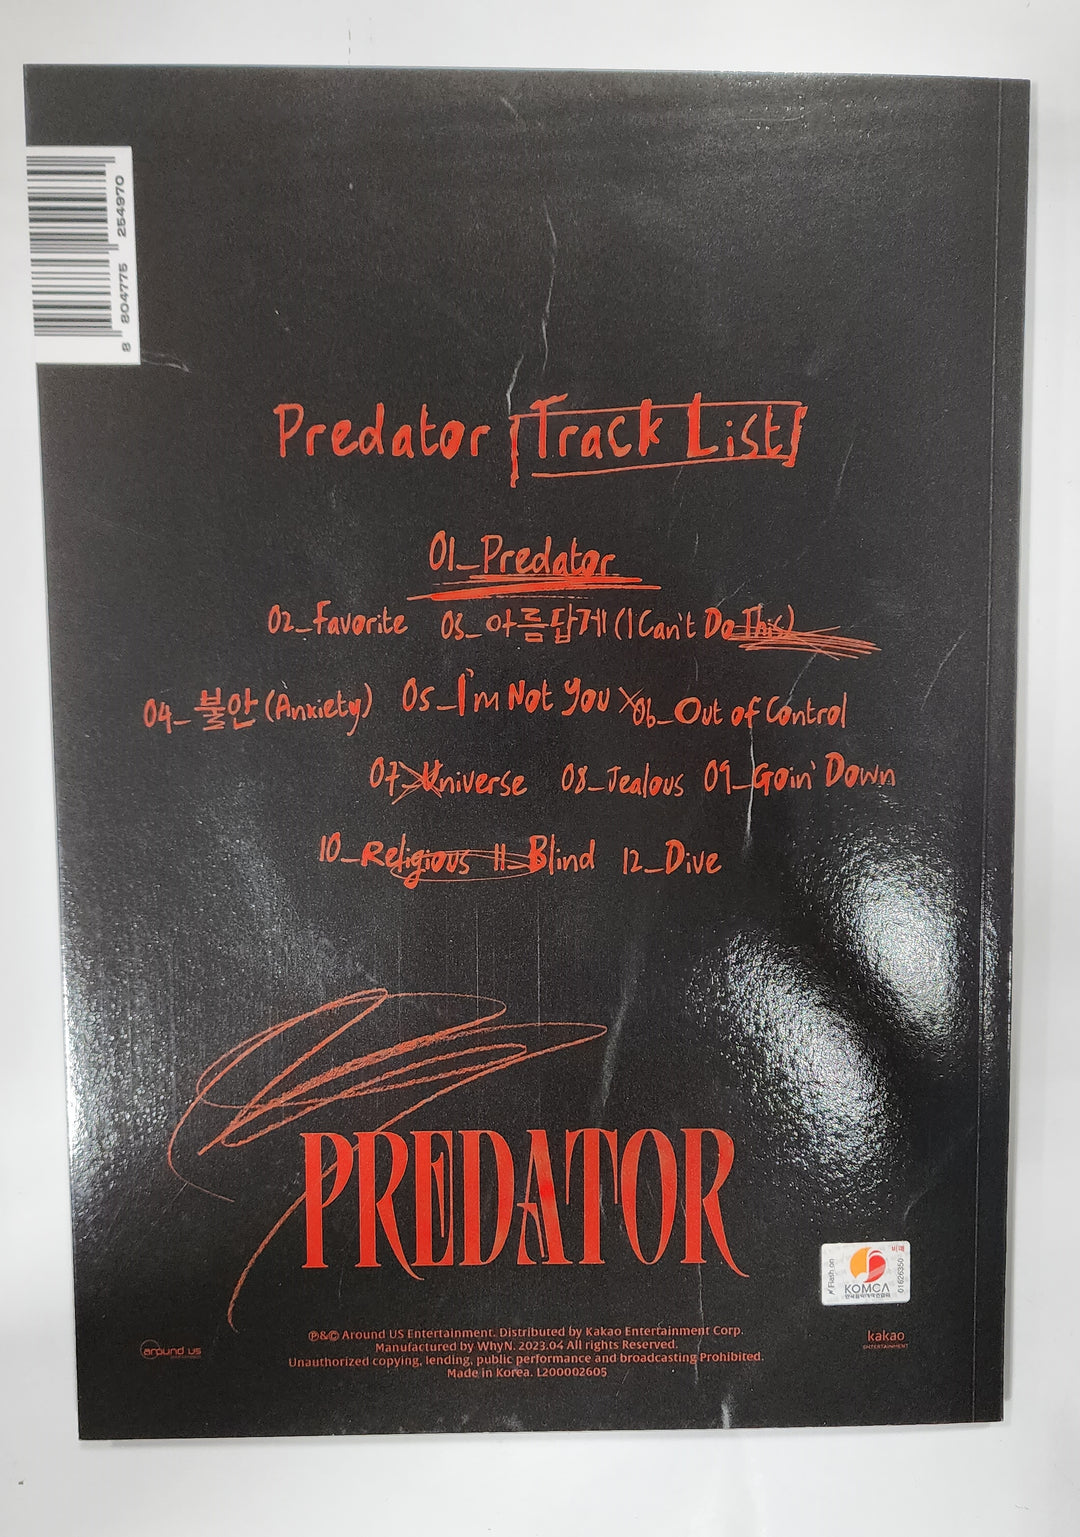 Lee Gikwang "Predator" - Hand Autographed(Signed) Promo Album